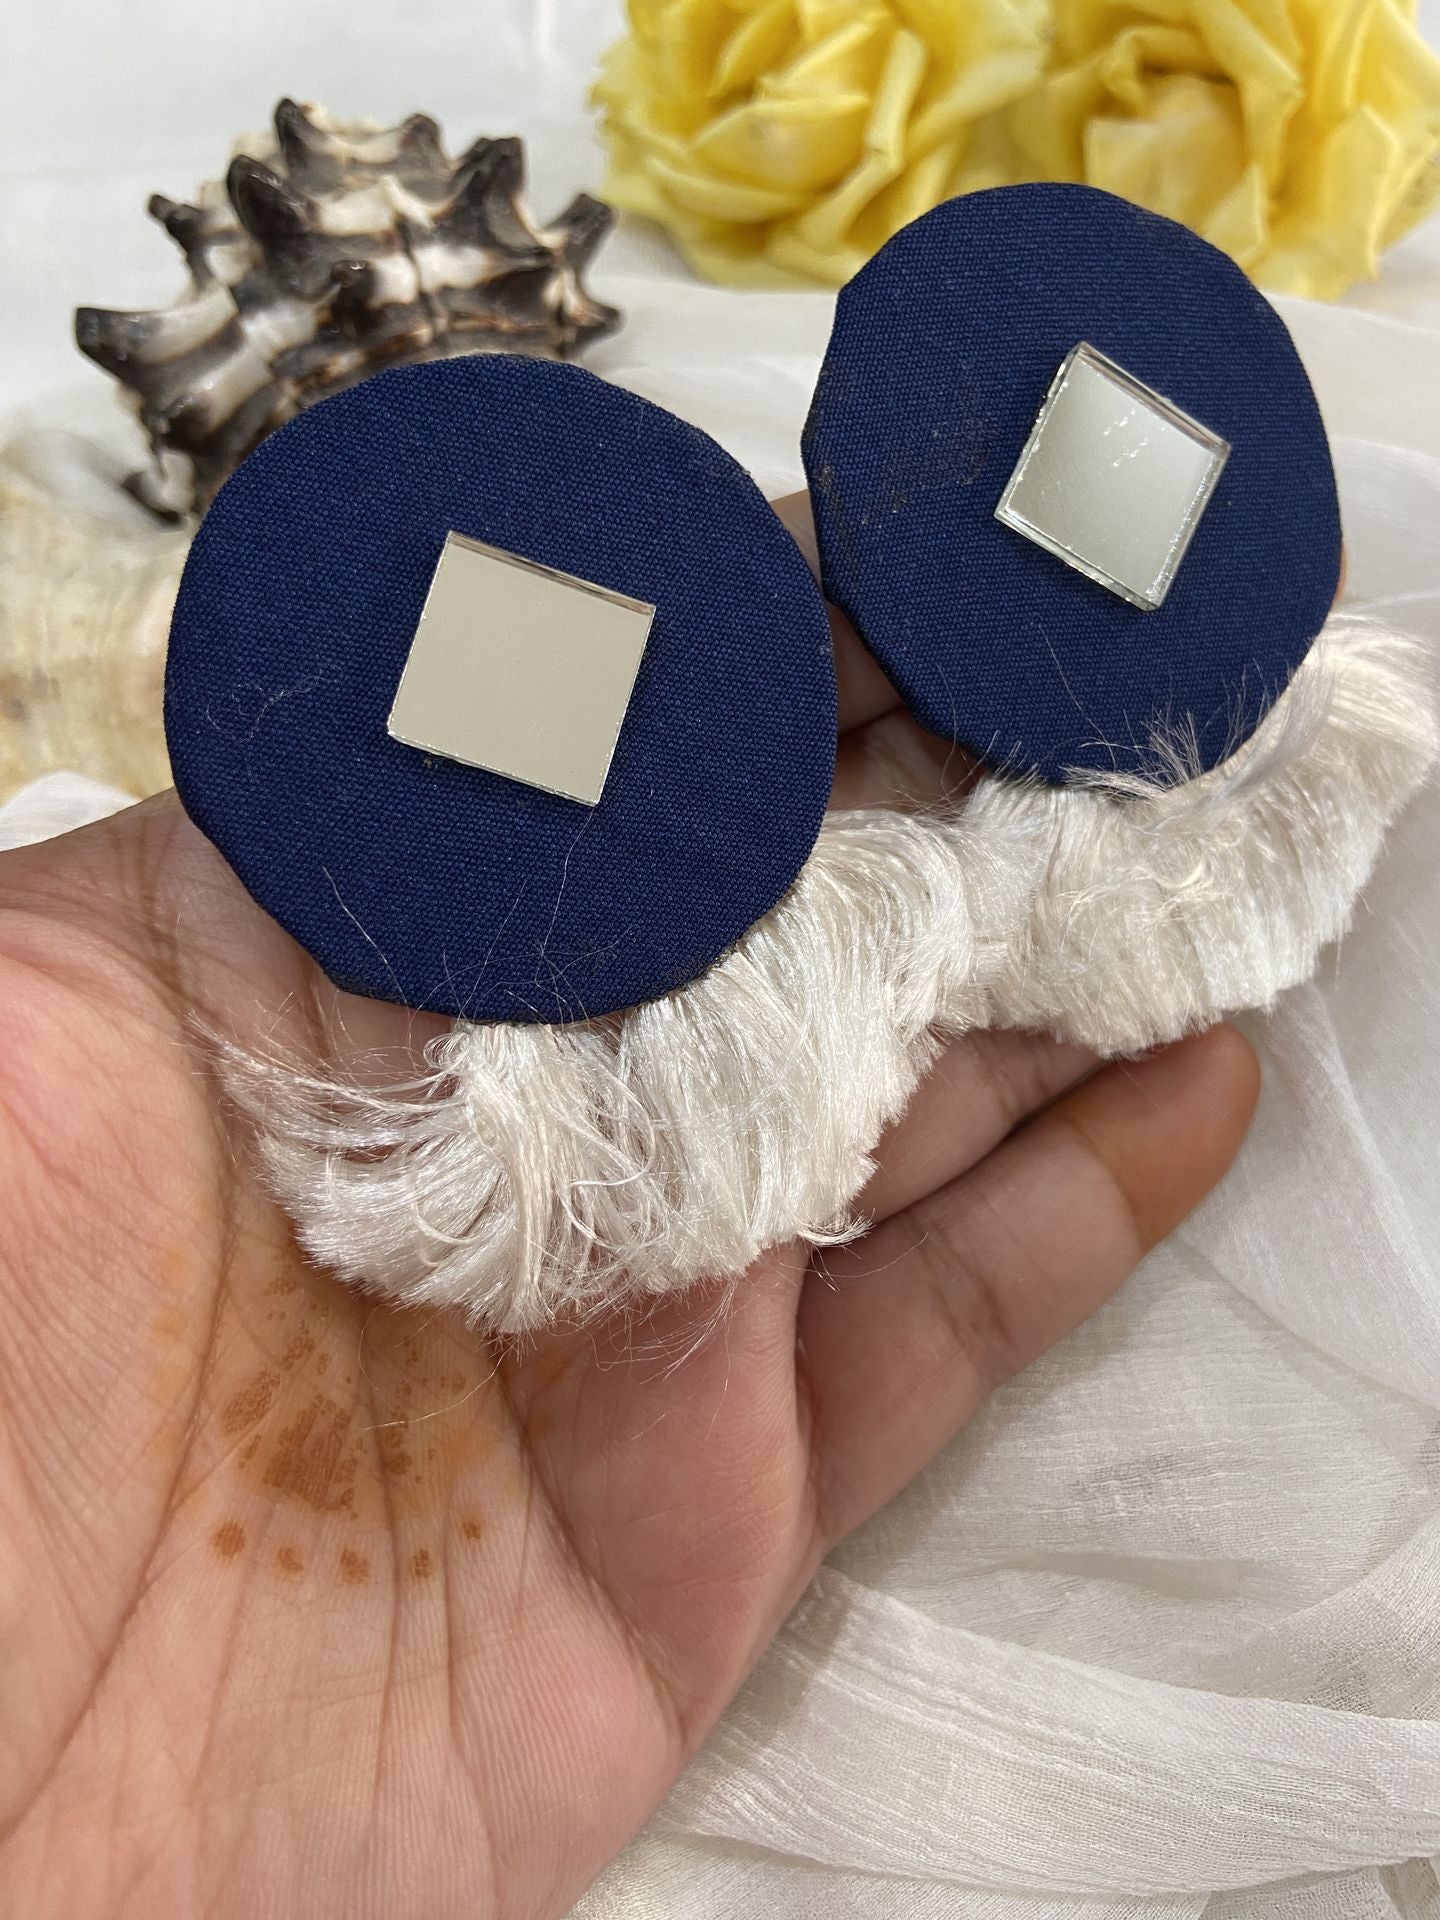 Laadli Handmade- Neelika- Mirror Handmade Earrings